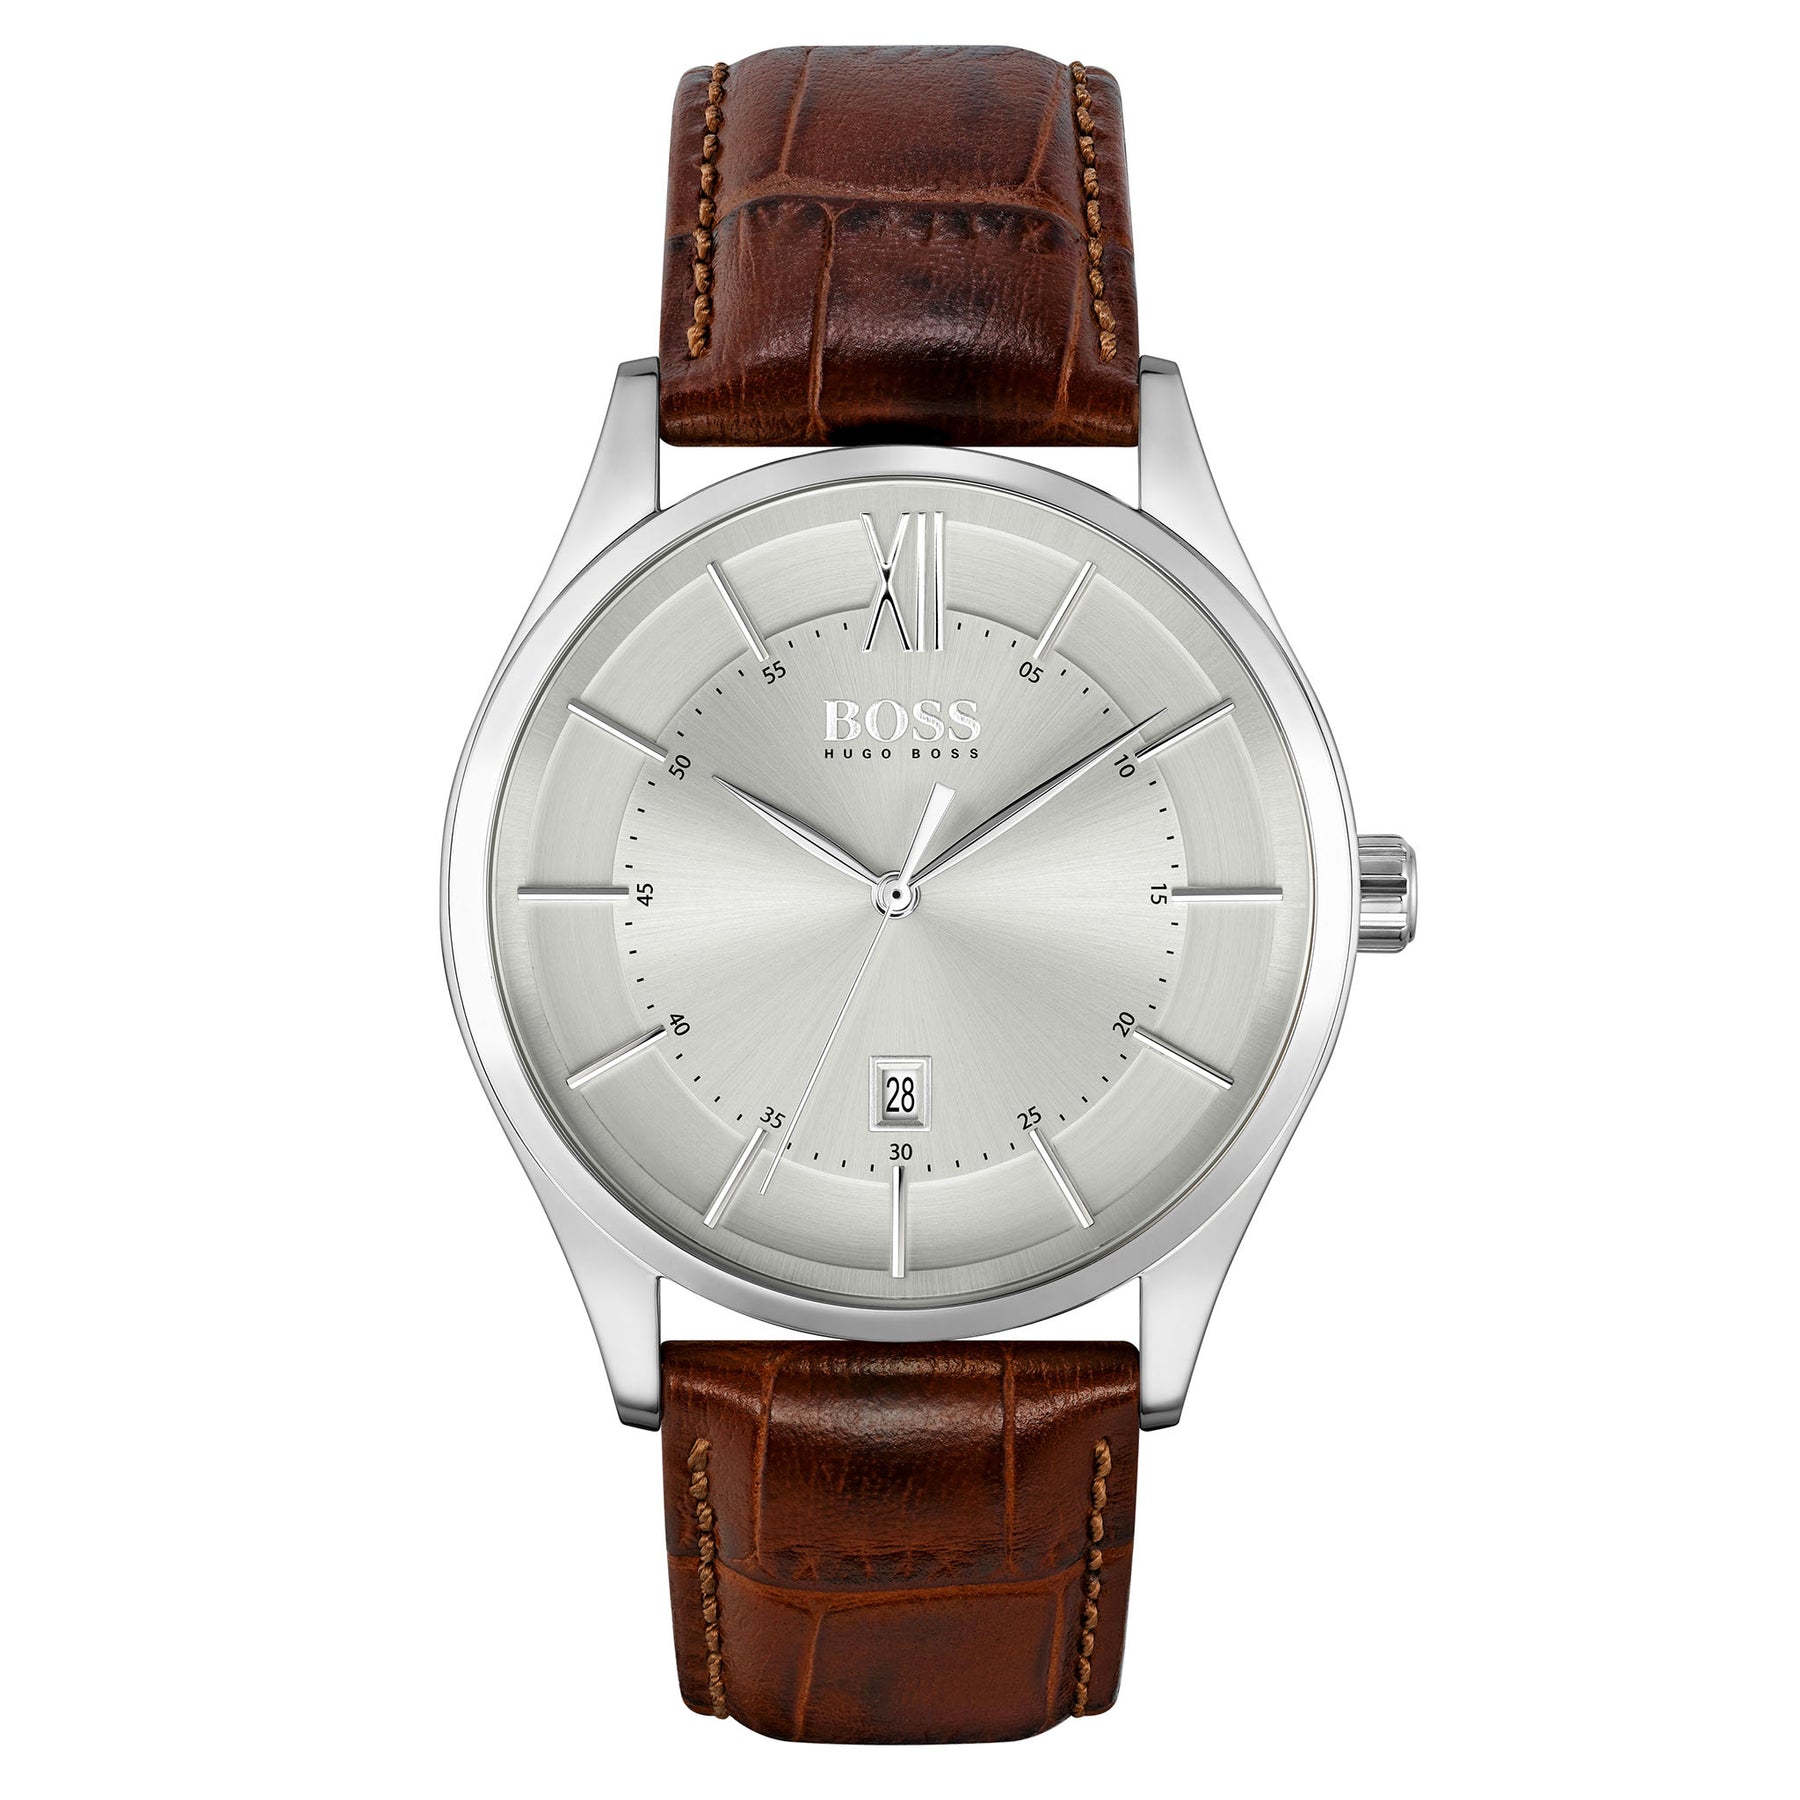 Watch Brown Boss - Hugo Men\'s Watch Distinction The – 1513795 Leather Australia Factory